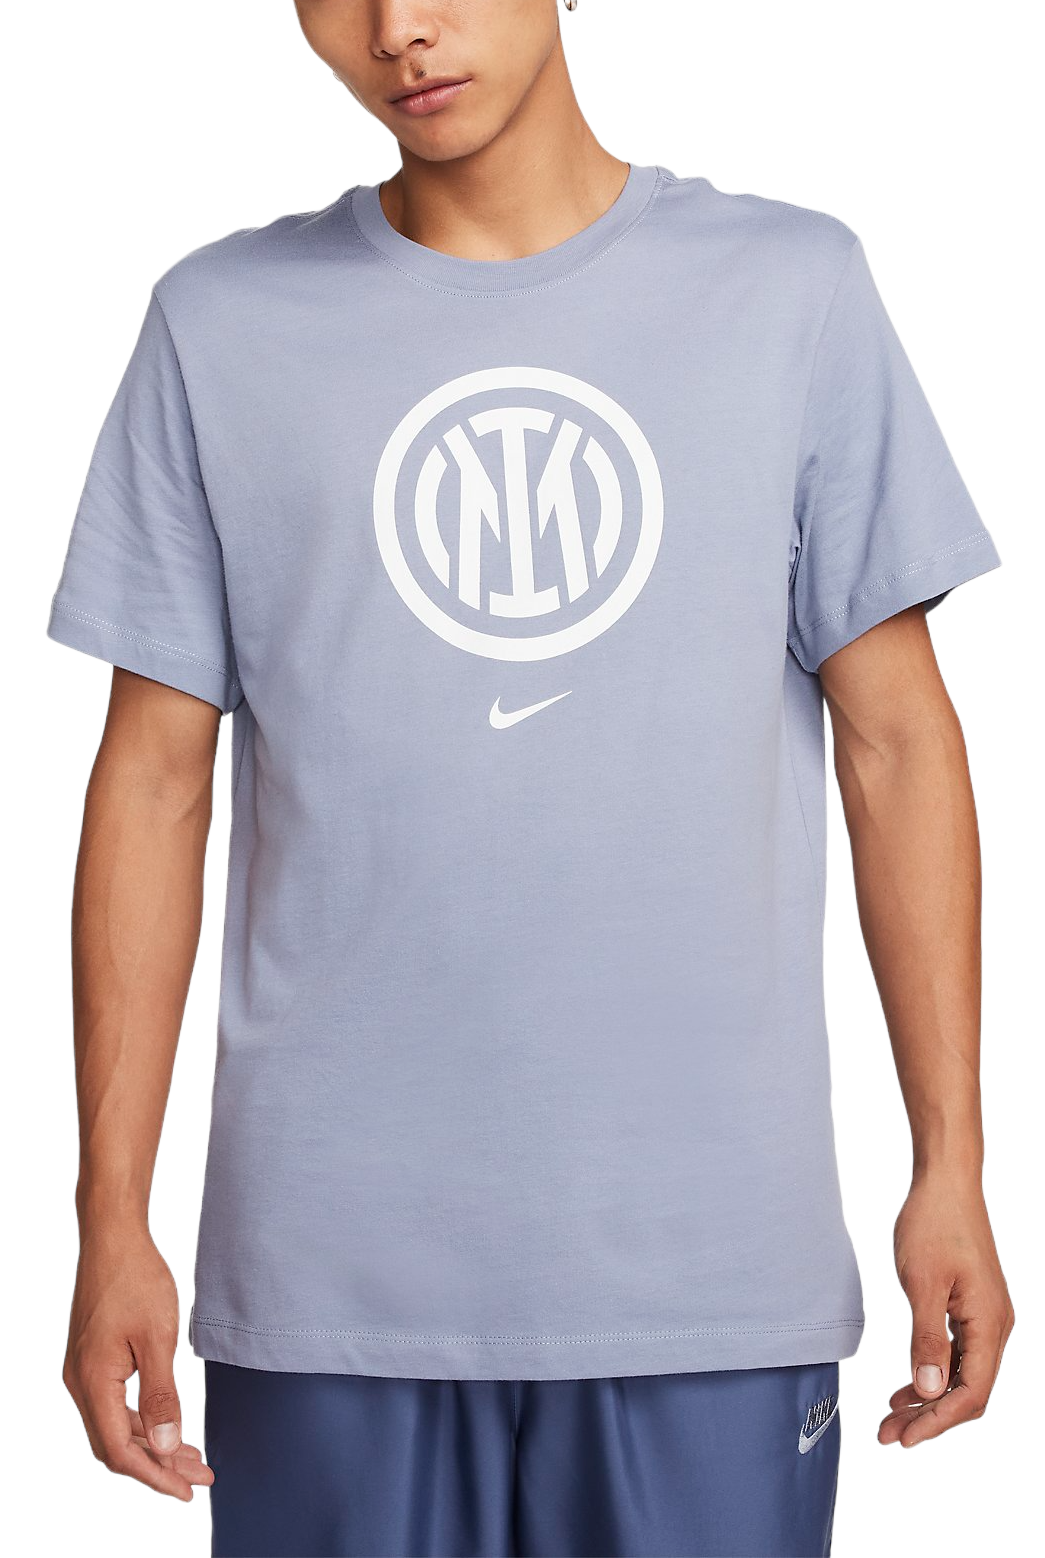 Camiseta Nike INTER M NK CREST TEE